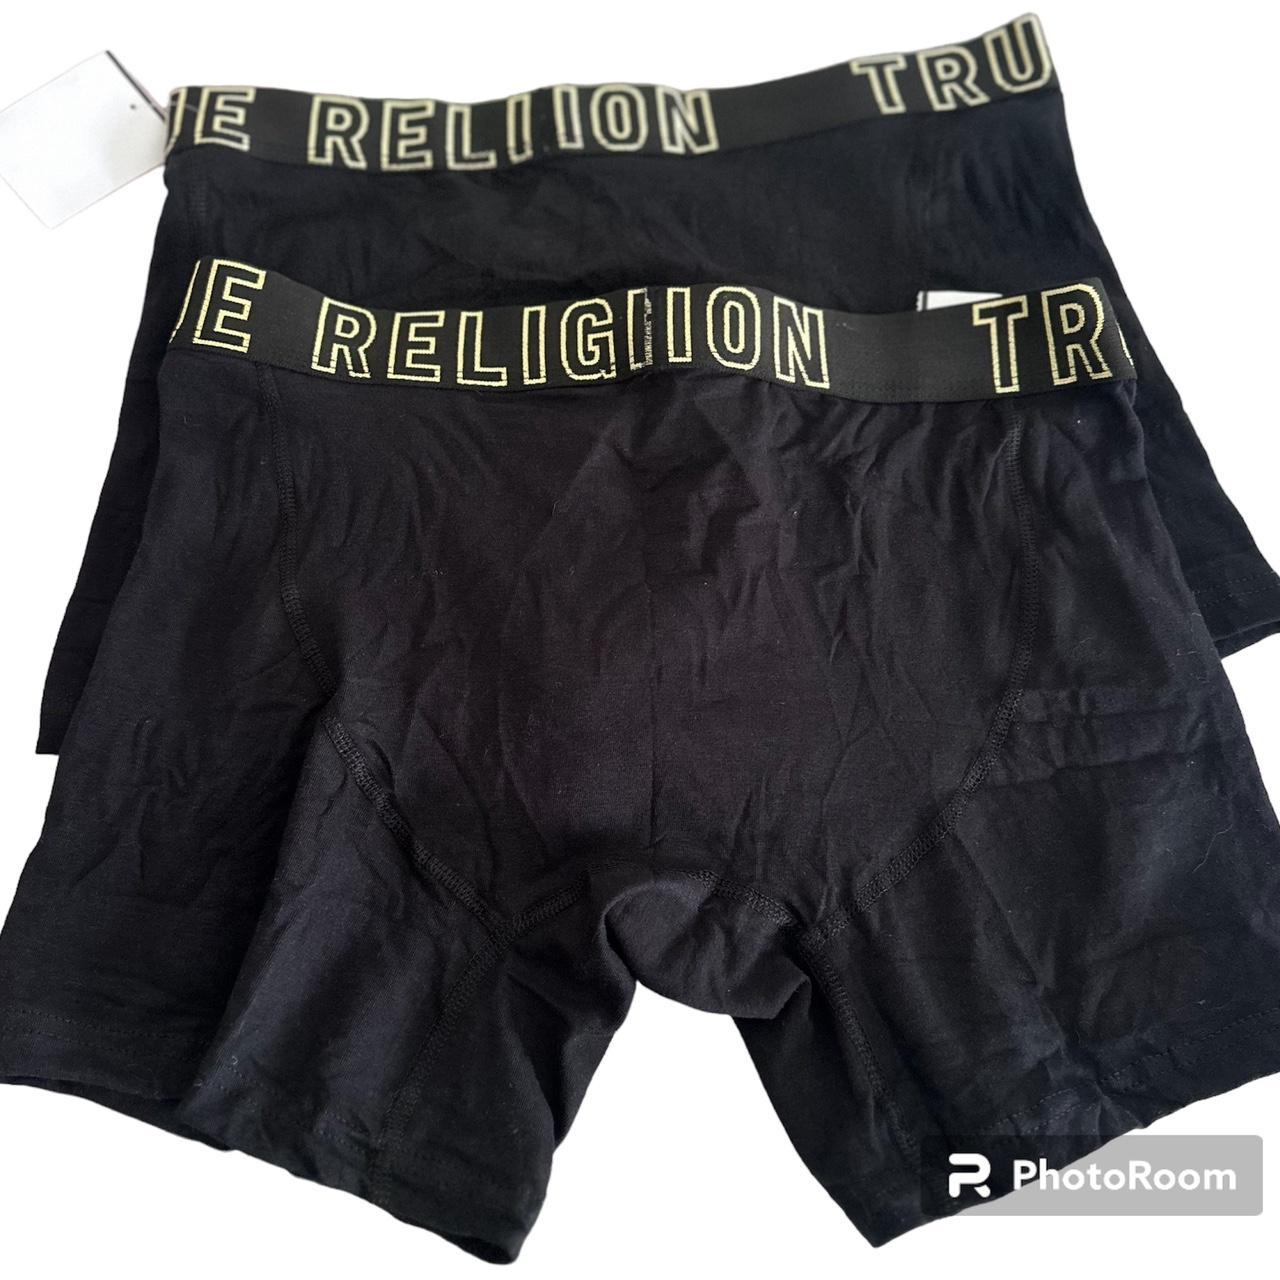 True Religion Boxer Briefs NWT. Excellent Condition. - Depop